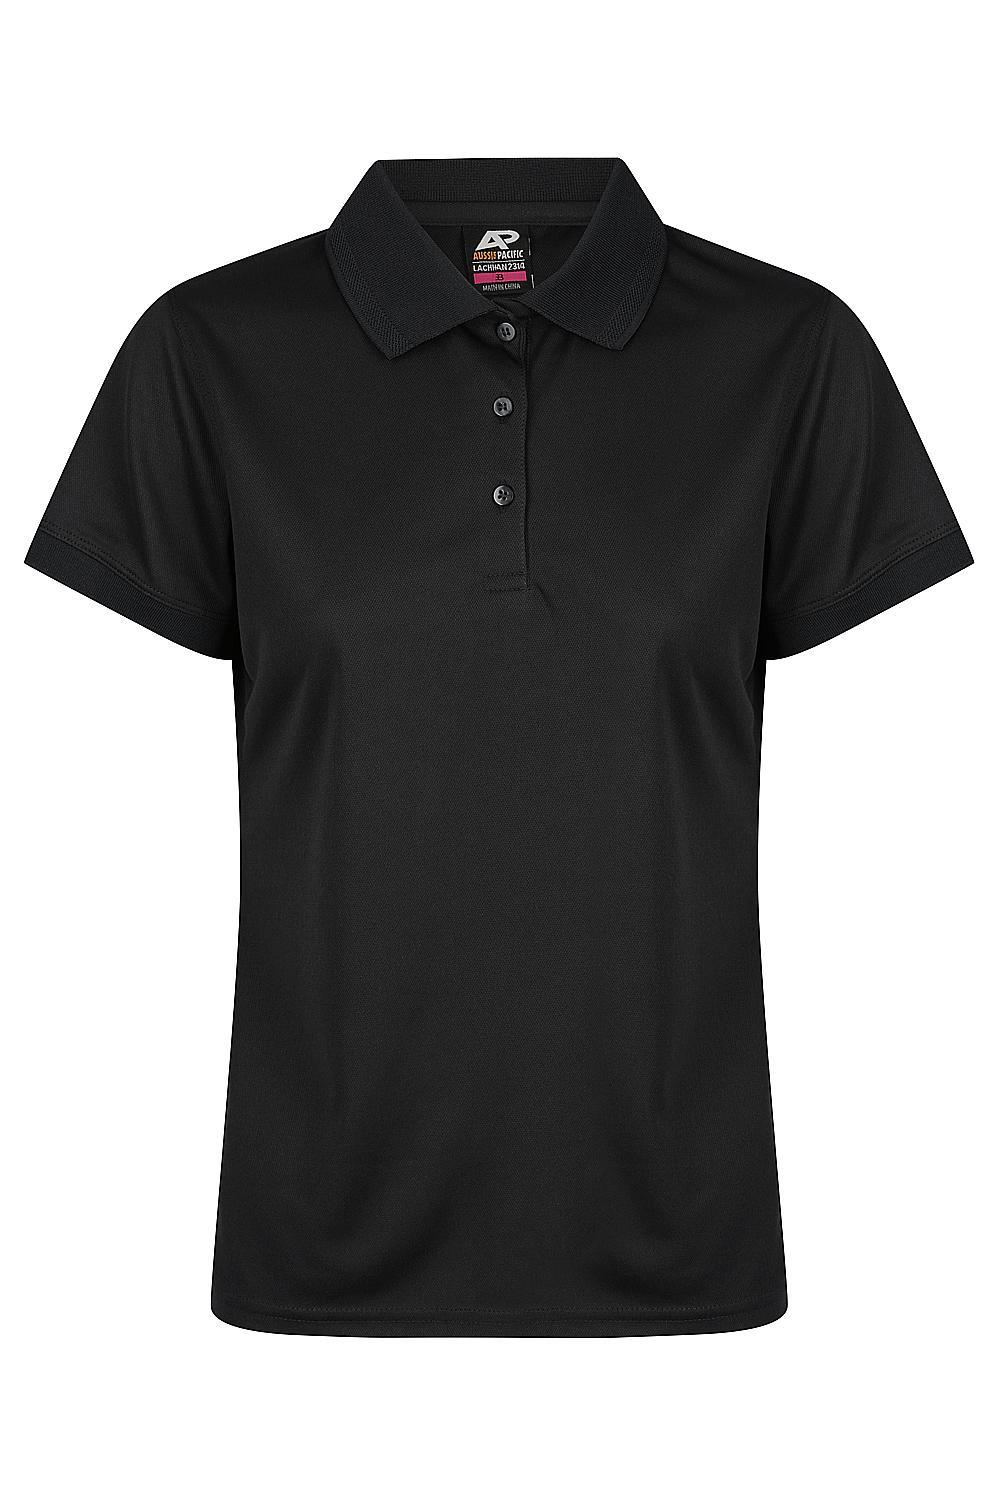 Custom Ladies Lachlan Shirts - Black